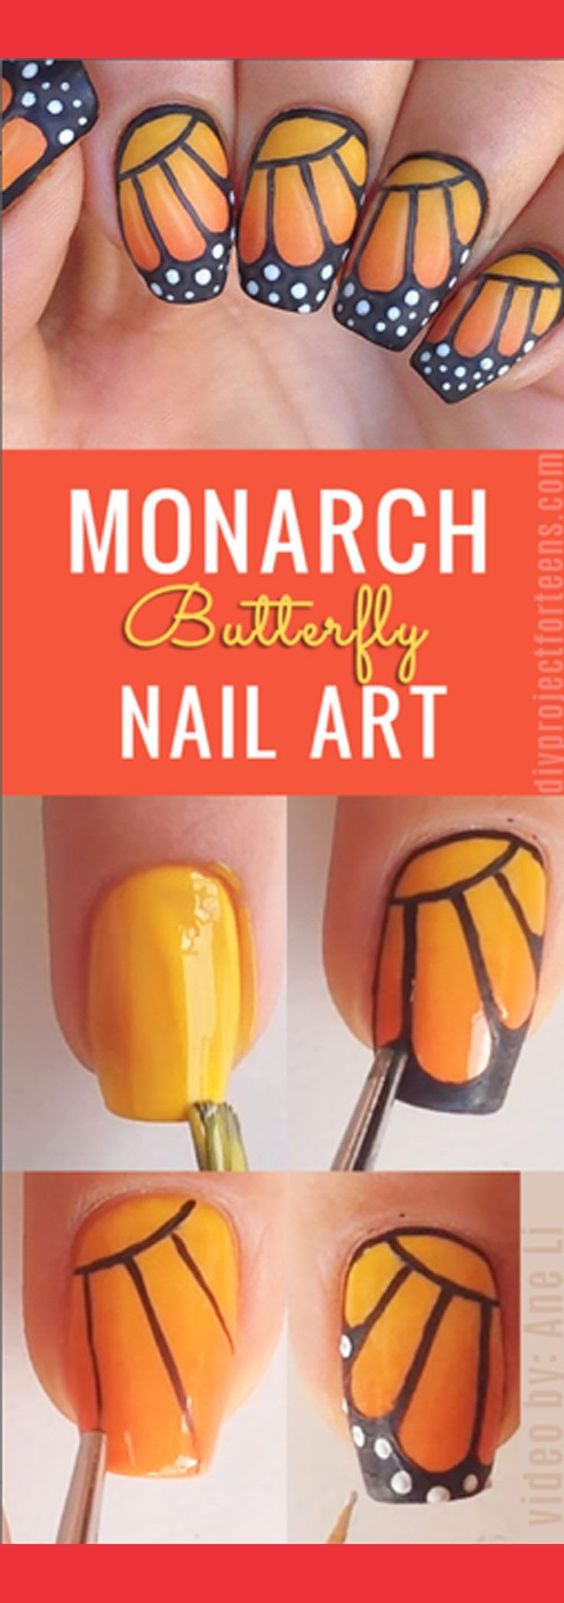 butterfly-nail-art via